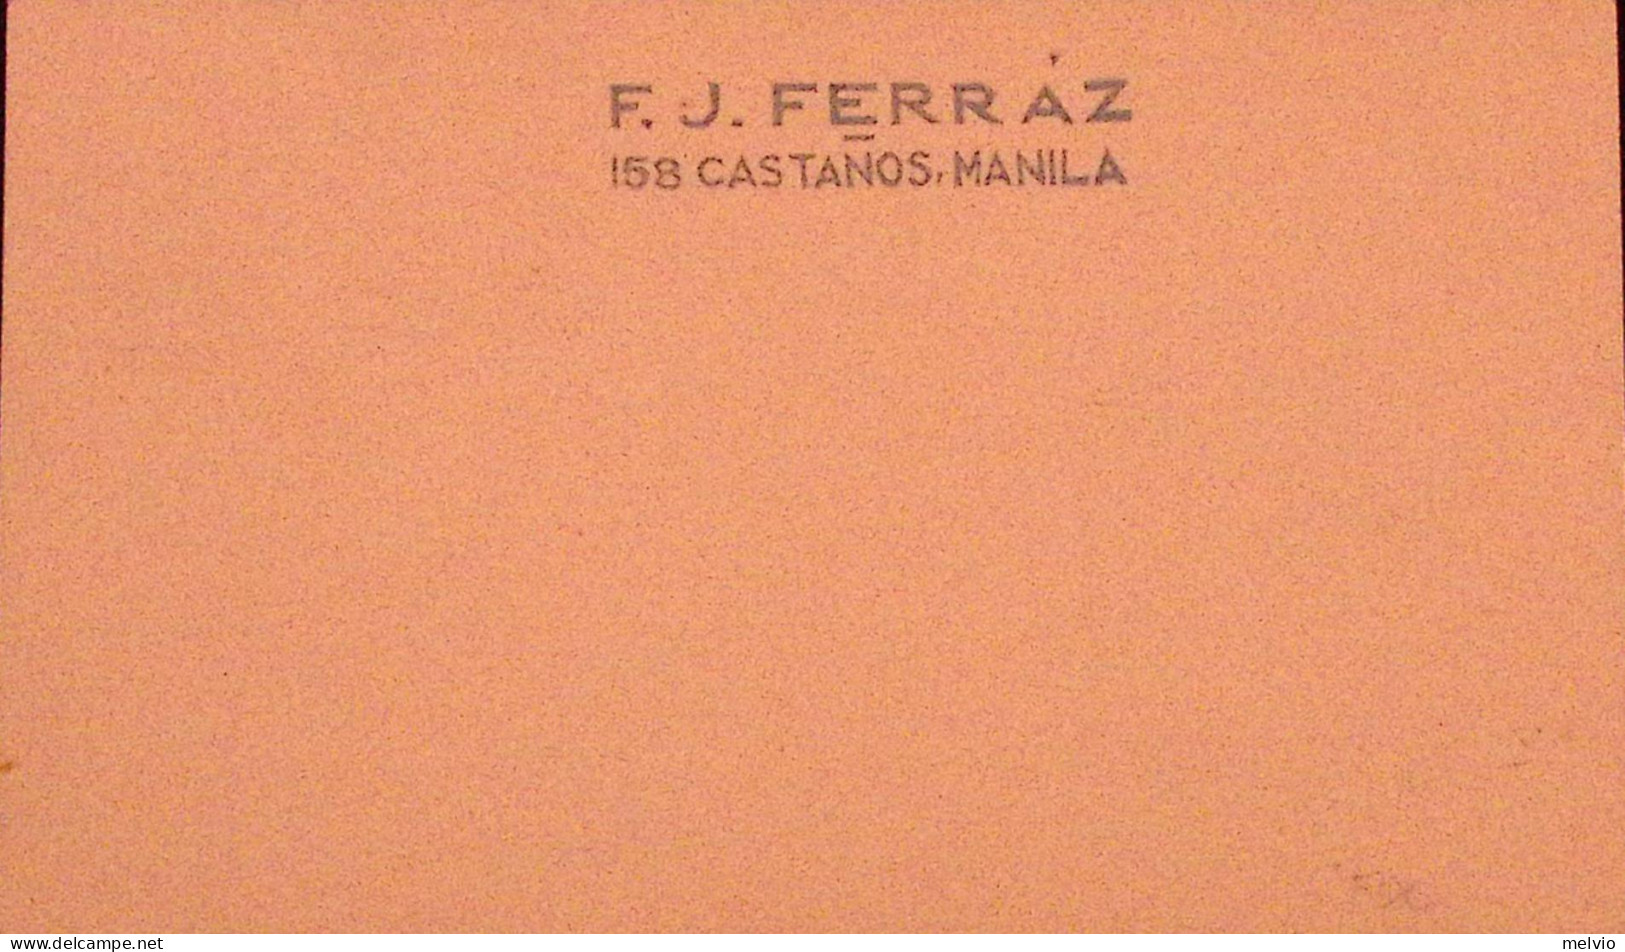 1943-Filippine Occ. Giapponese 350 Ann. Stampa Su Cartolina Postale Manila (20.6 - Philippines